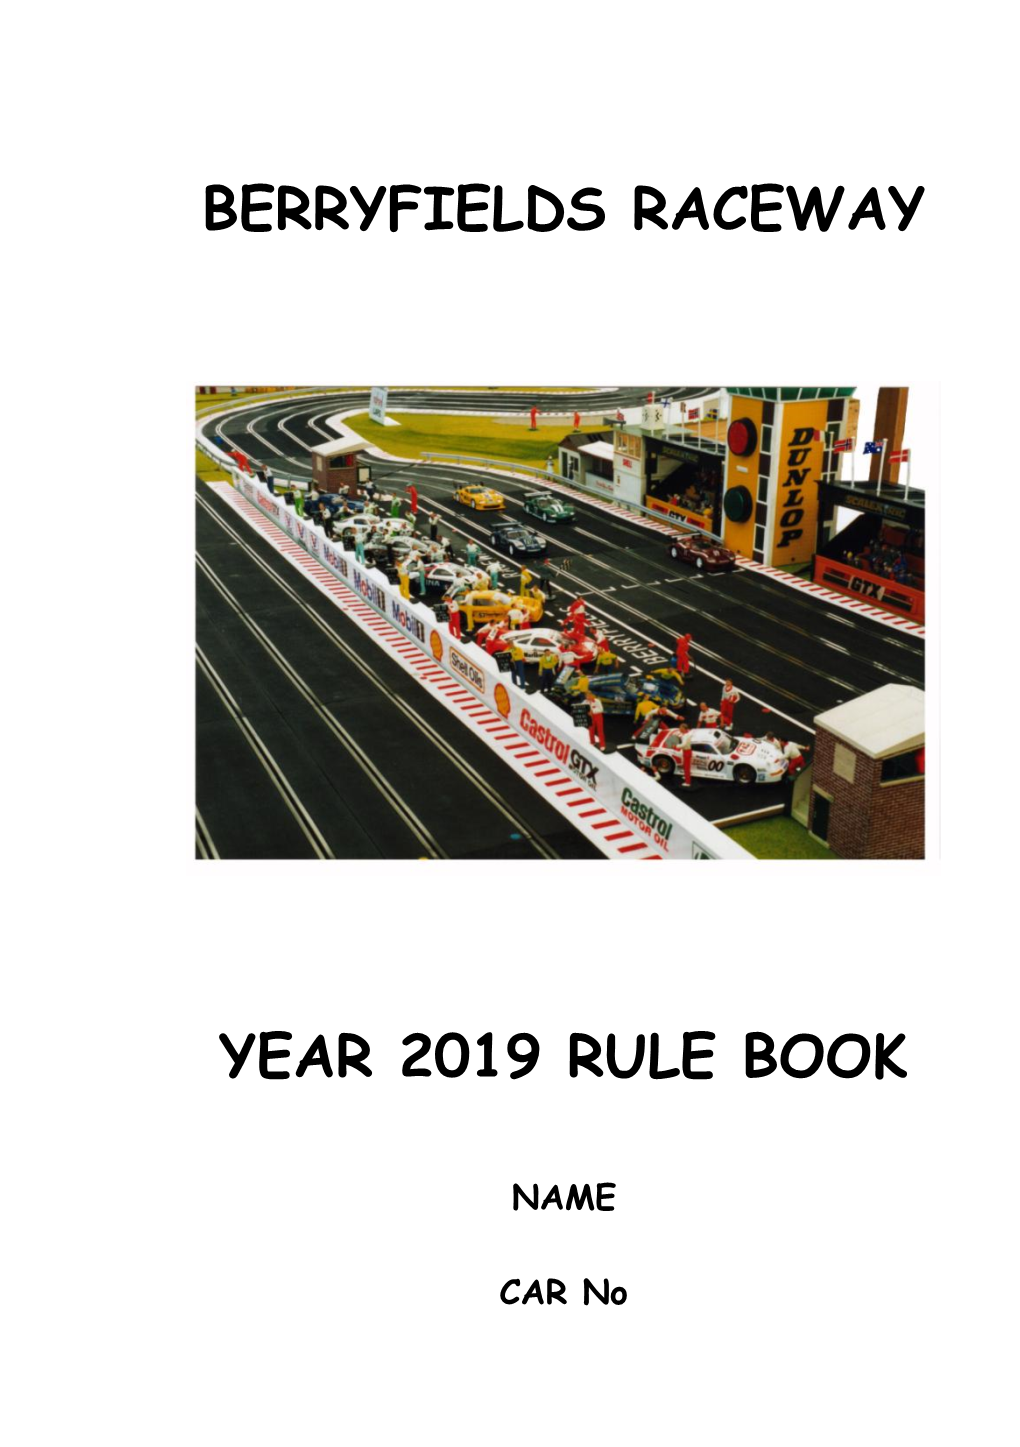 Berryfields Raceway Year 2019 Rule Book